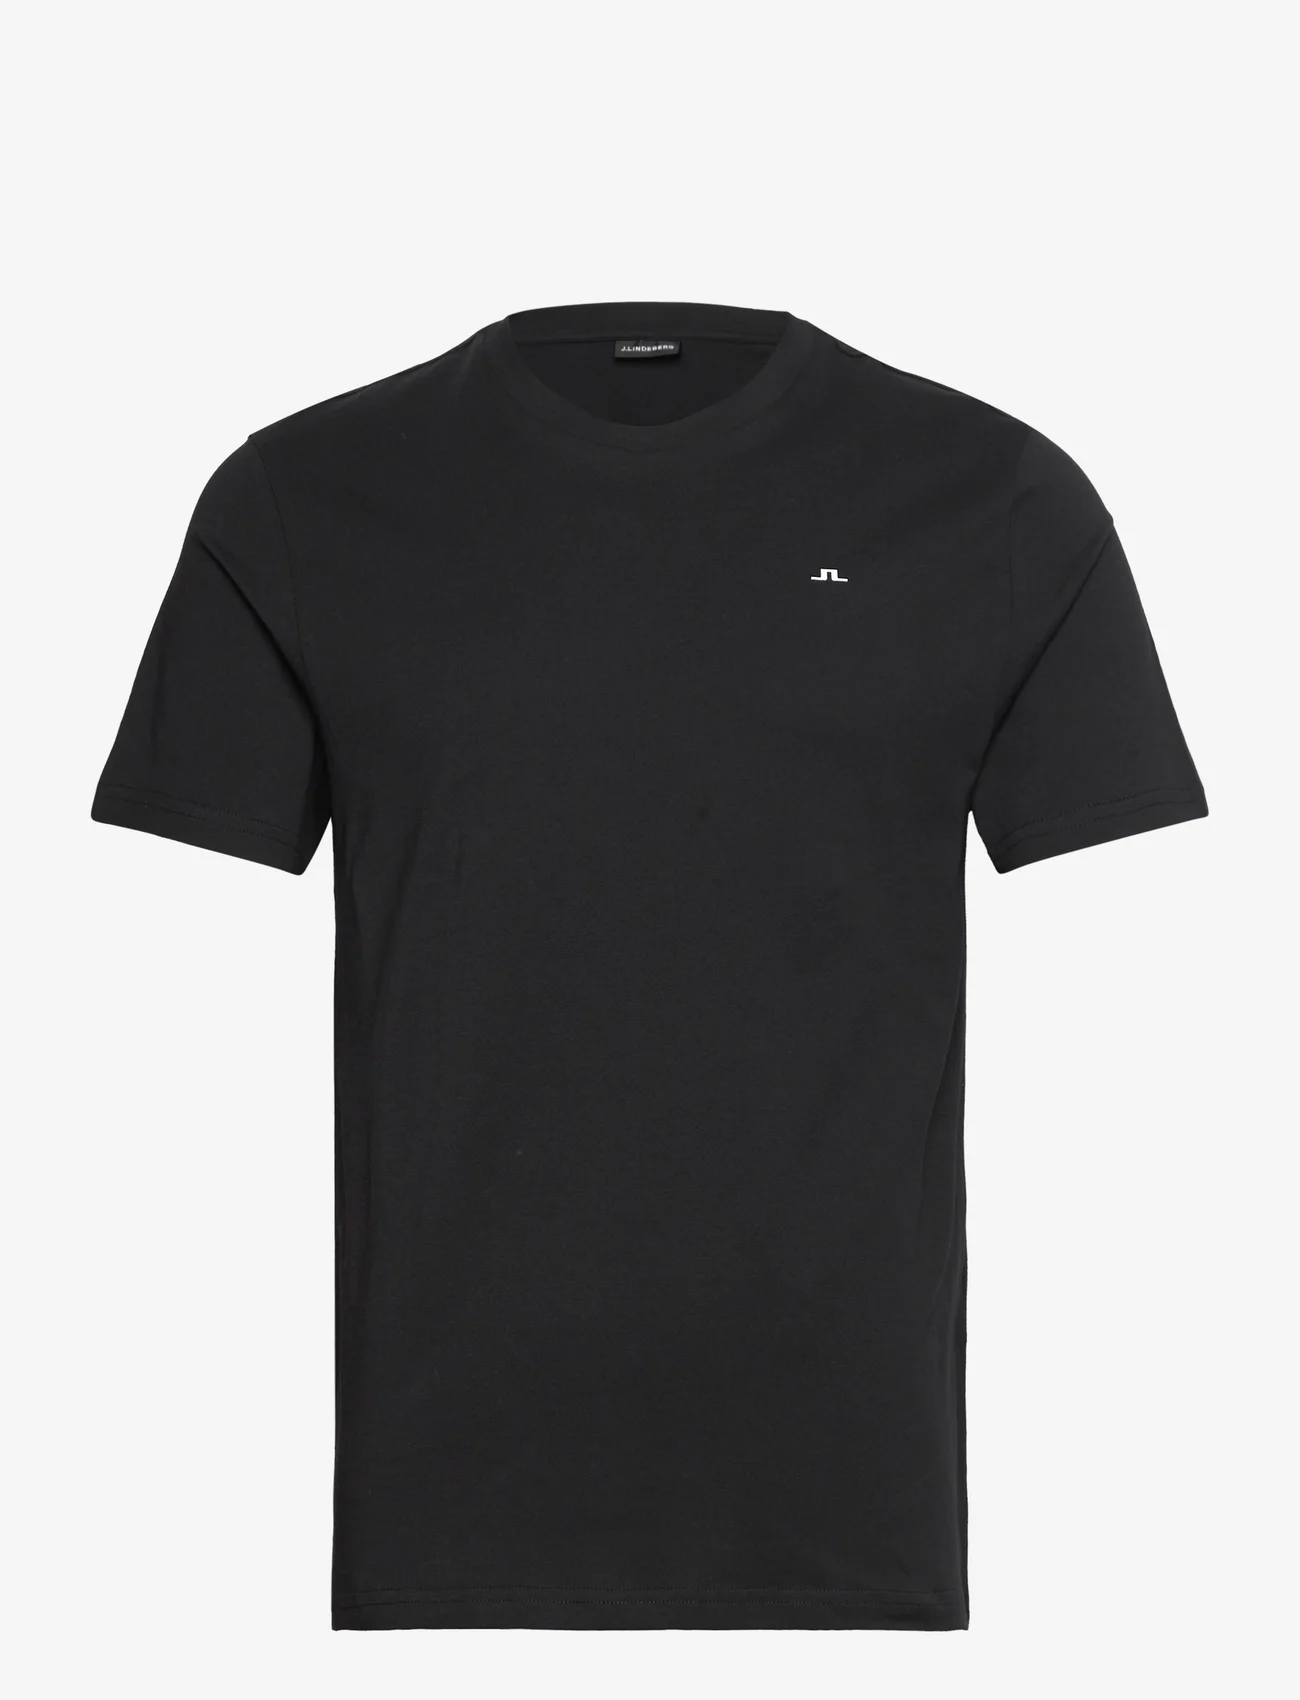 J. Lindeberg - M Cotton Blend T-shirt - kortärmade t-shirts - black - 0